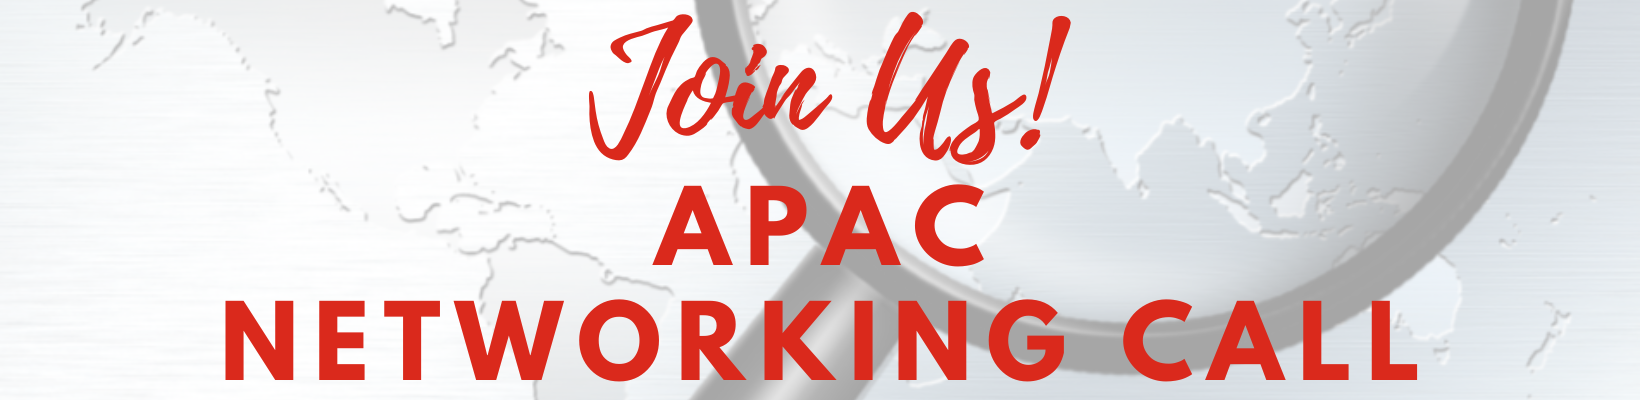 APAC Networking Call Header